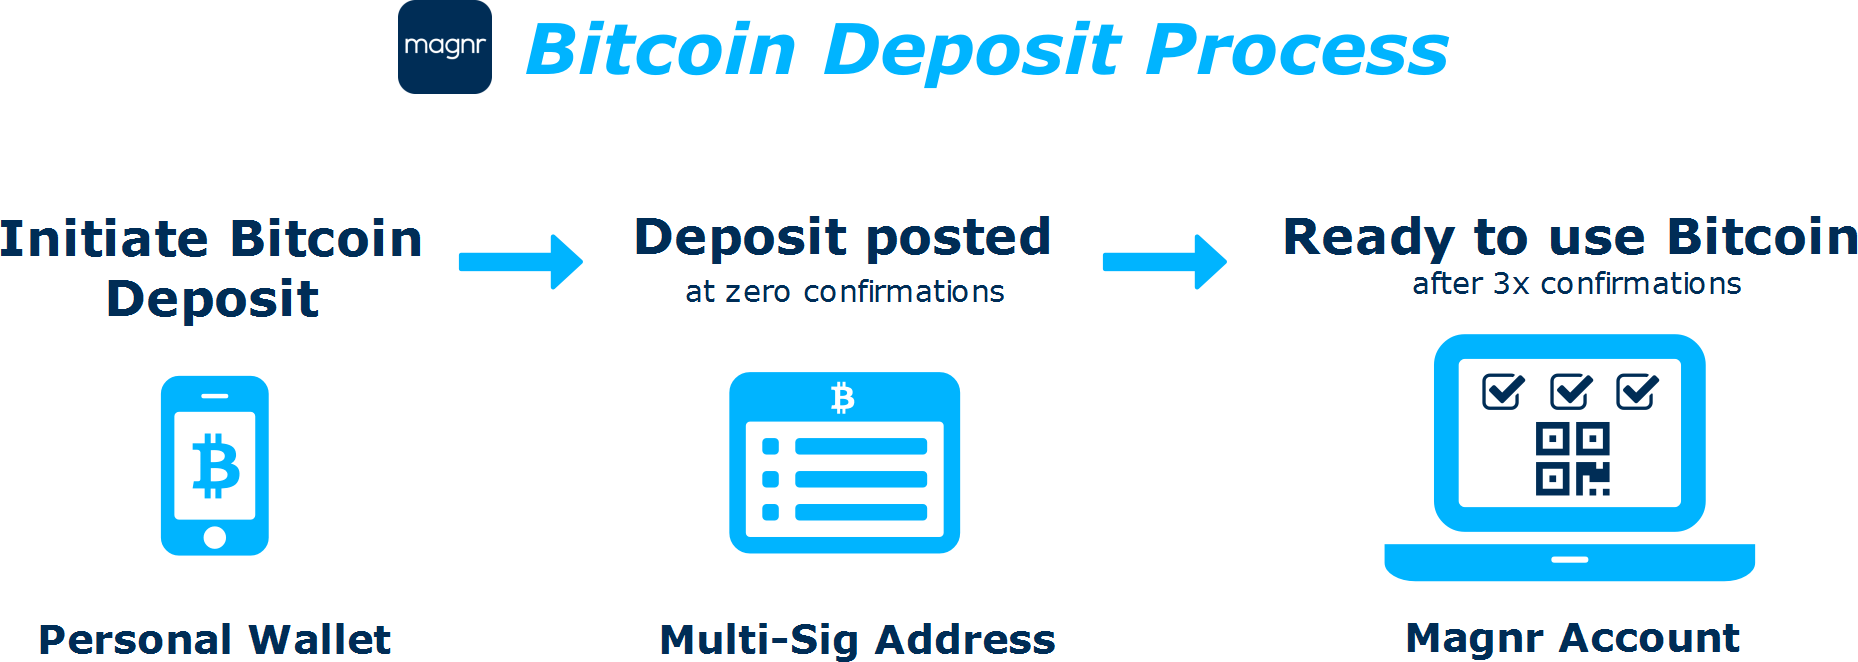 Bitcoin deposit